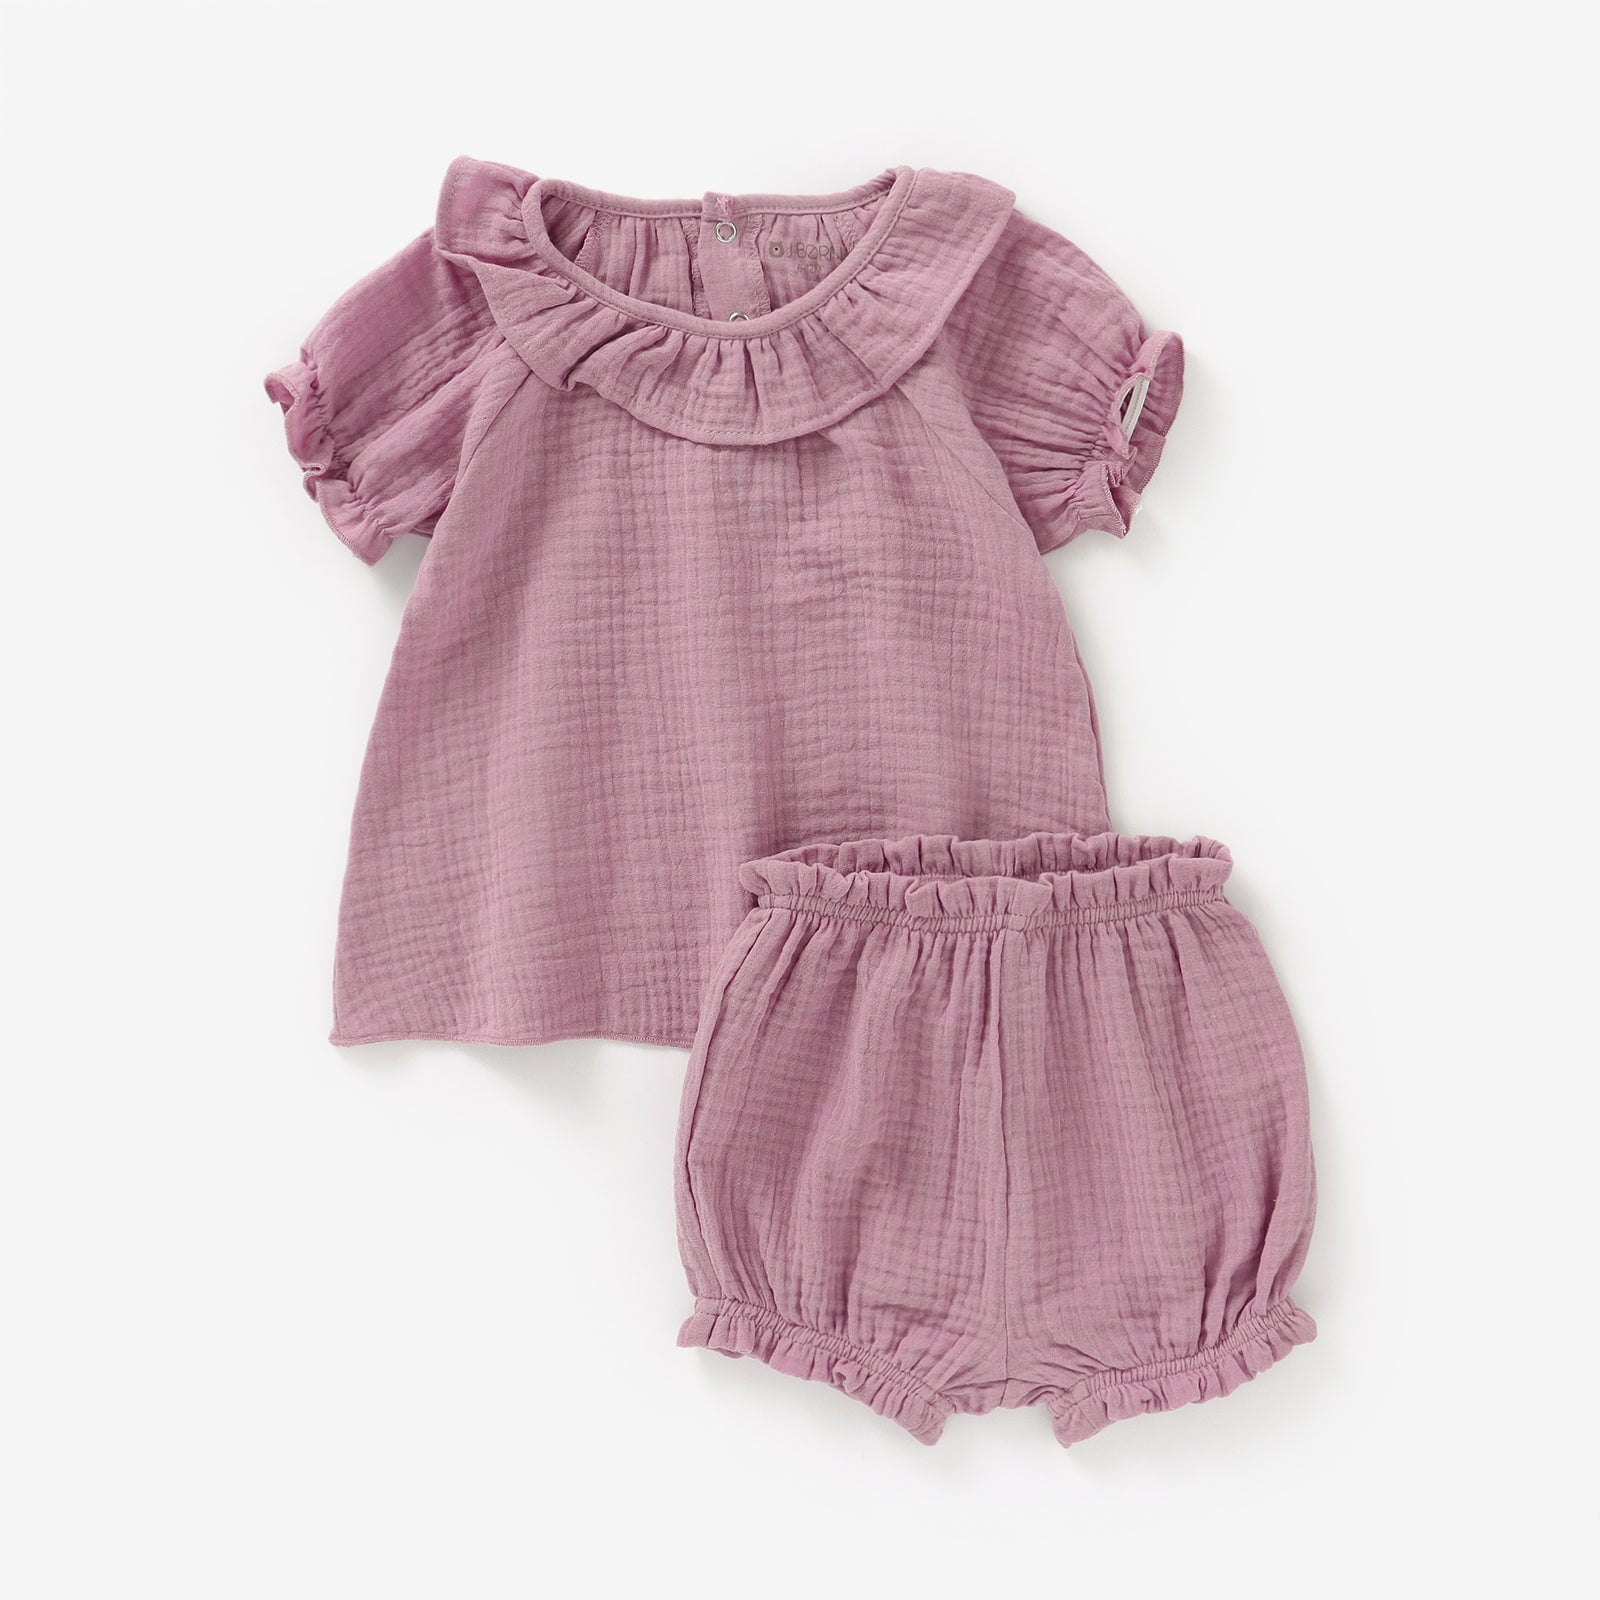 JBØRN Organic Cotton Muslin Baby Girl Outfit